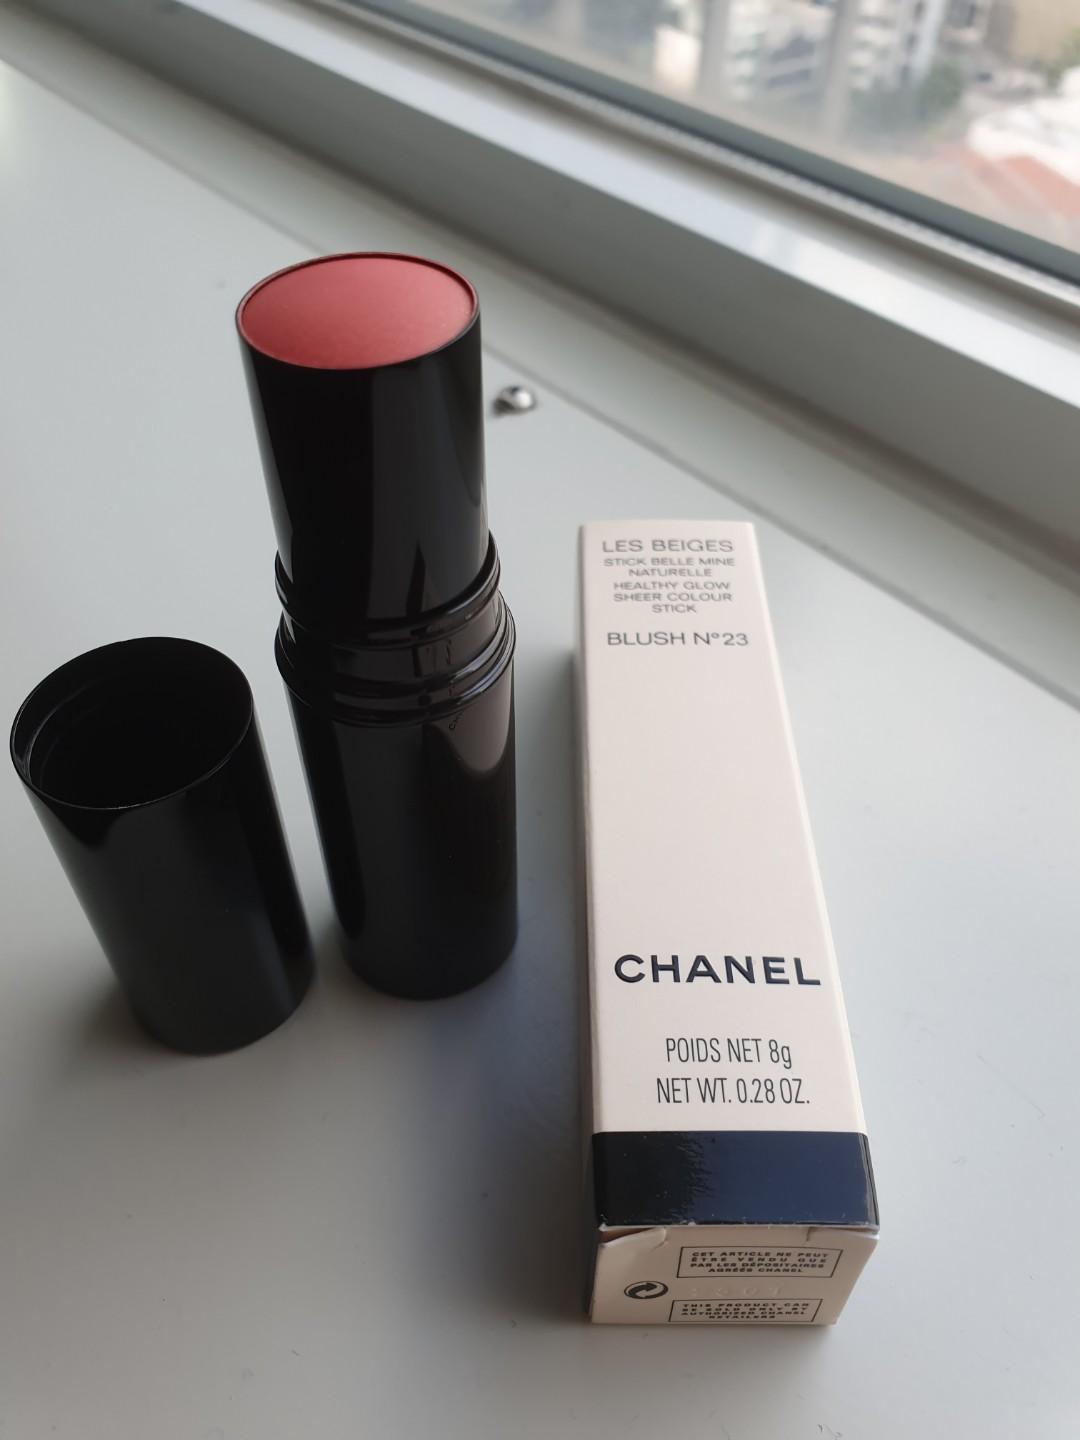 CHANEL, Makeup, New Chanel Les Beiges Healthy Glow Sheer Color Stick Blush  Bush N2